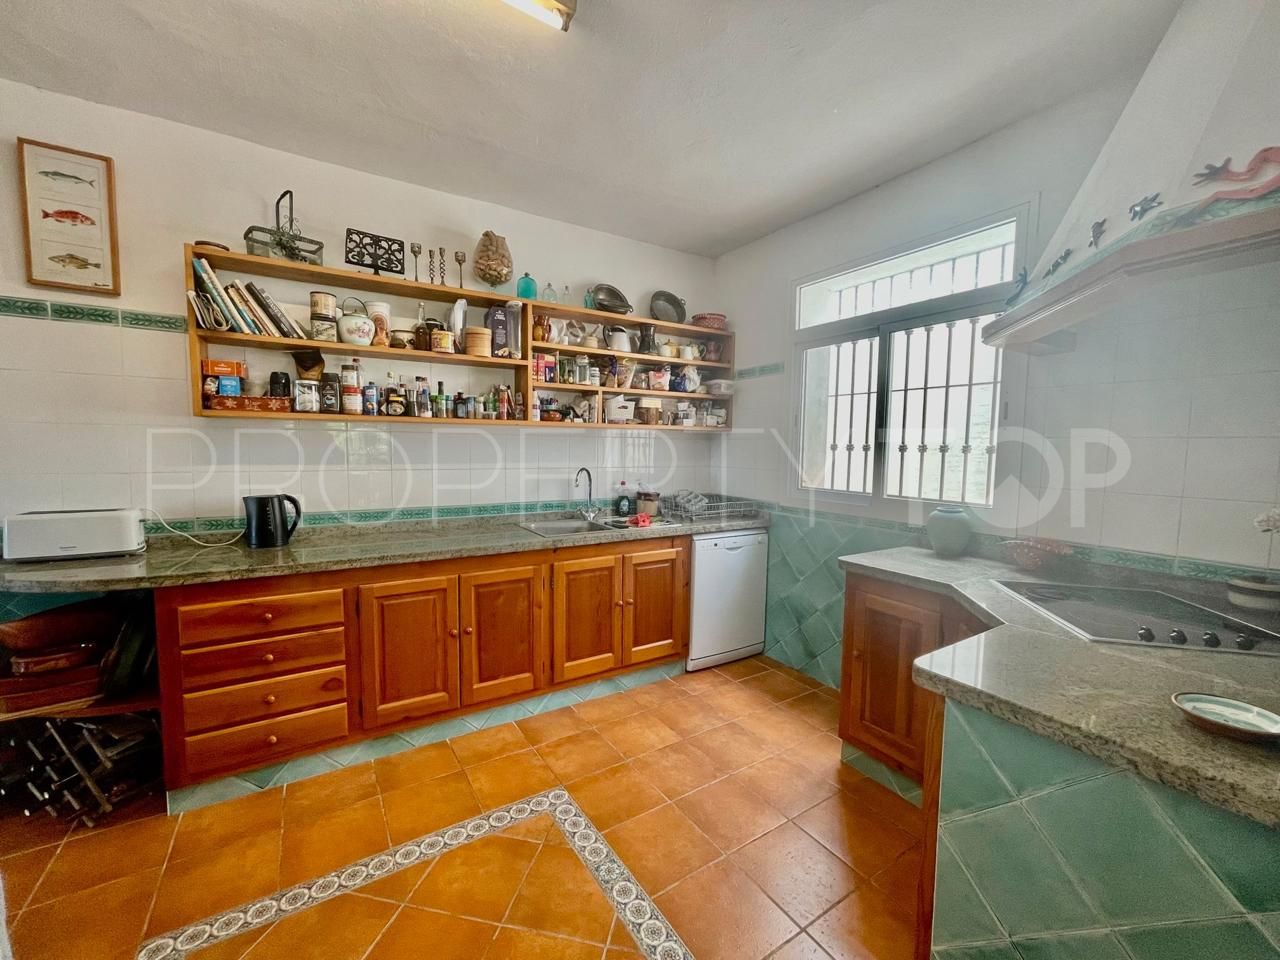 For sale studio in San Martin del Tesorillo with 6 bedrooms